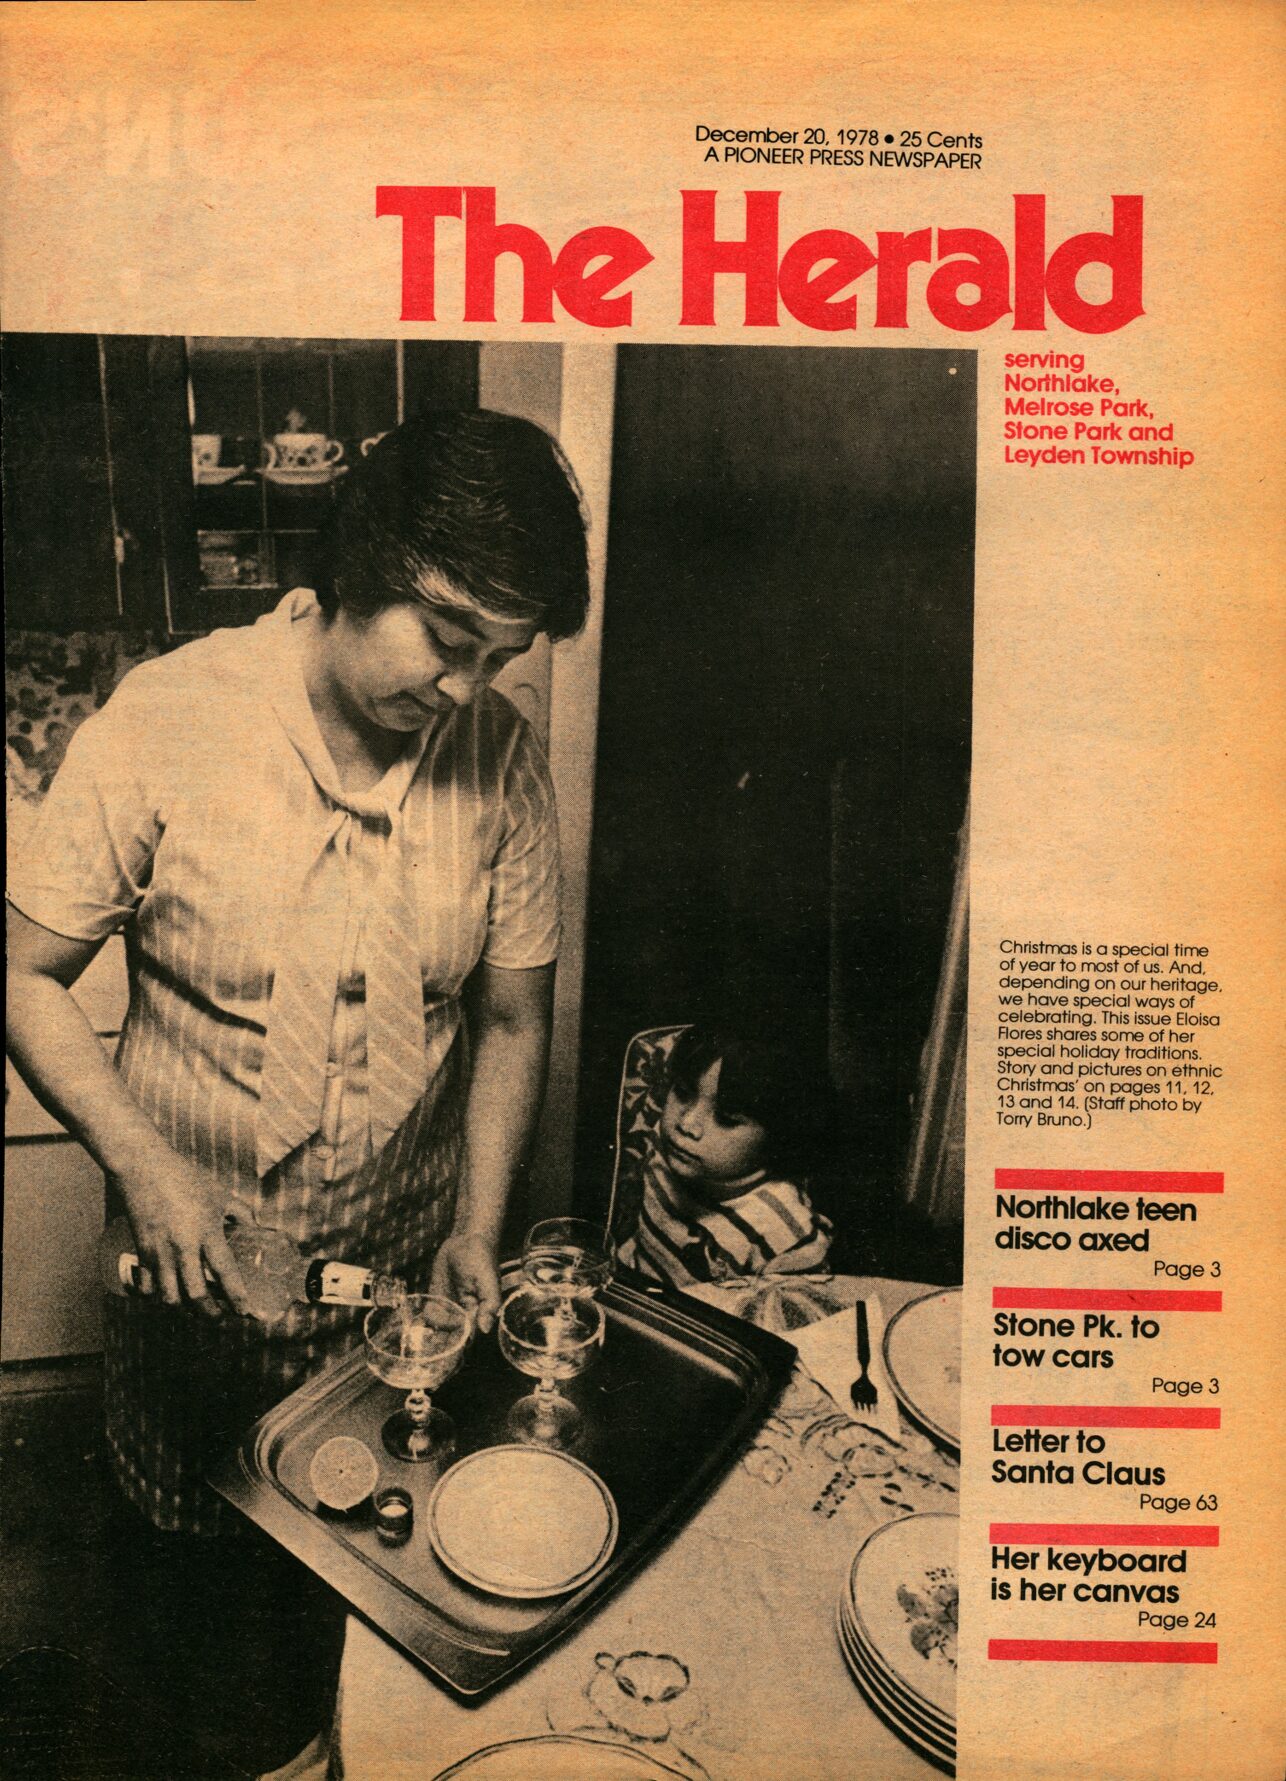 The Herald – 19781220